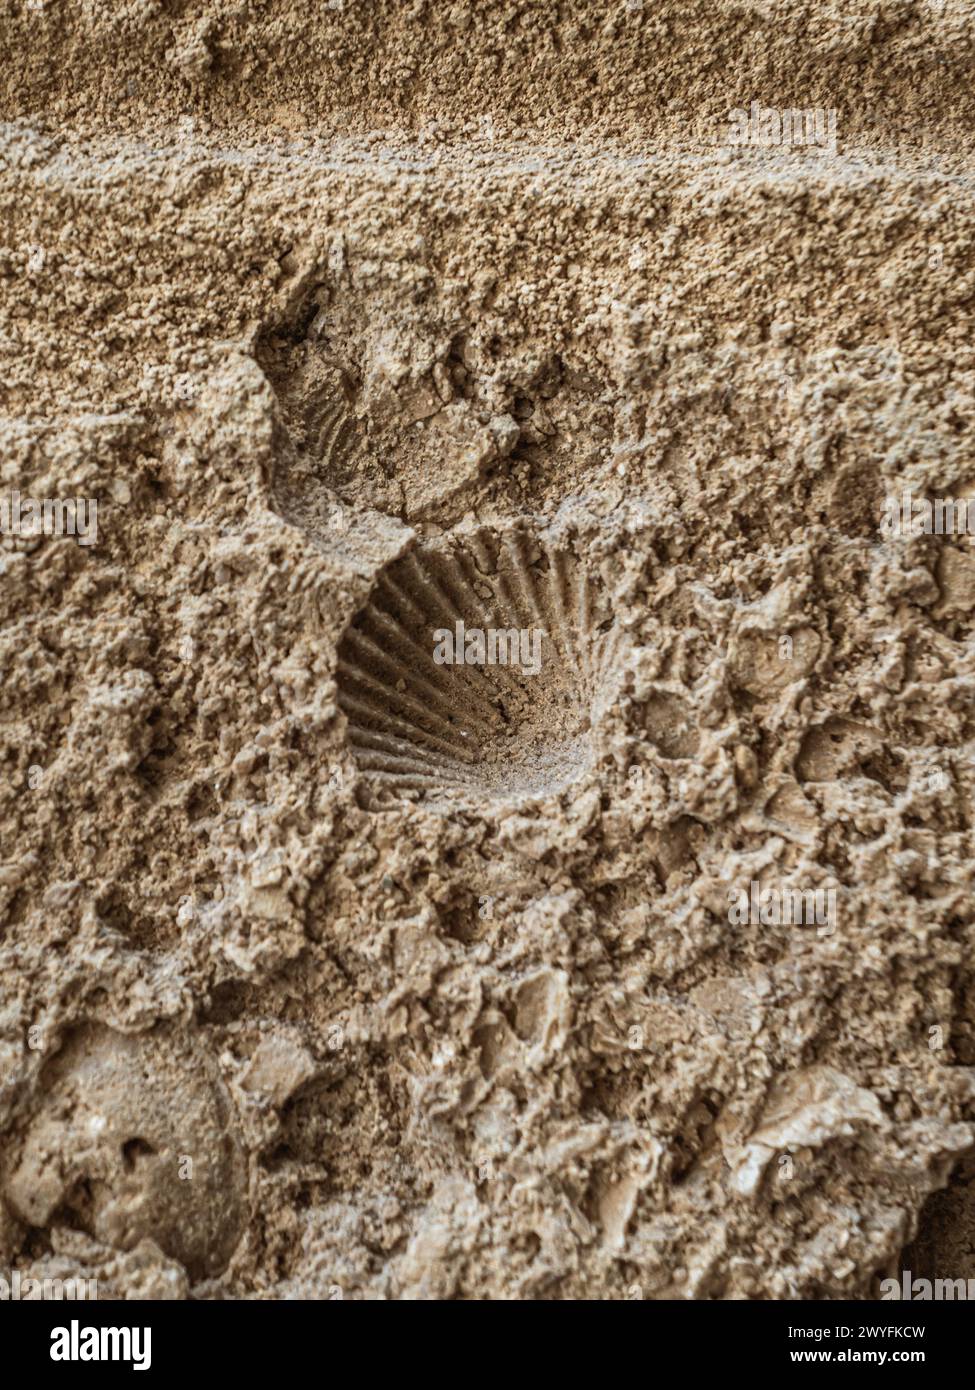 Impresión de una concha marina de almeja en piedra arenisca texturizada, fósil antiguo, pared en Cádiz, España Foto de stock